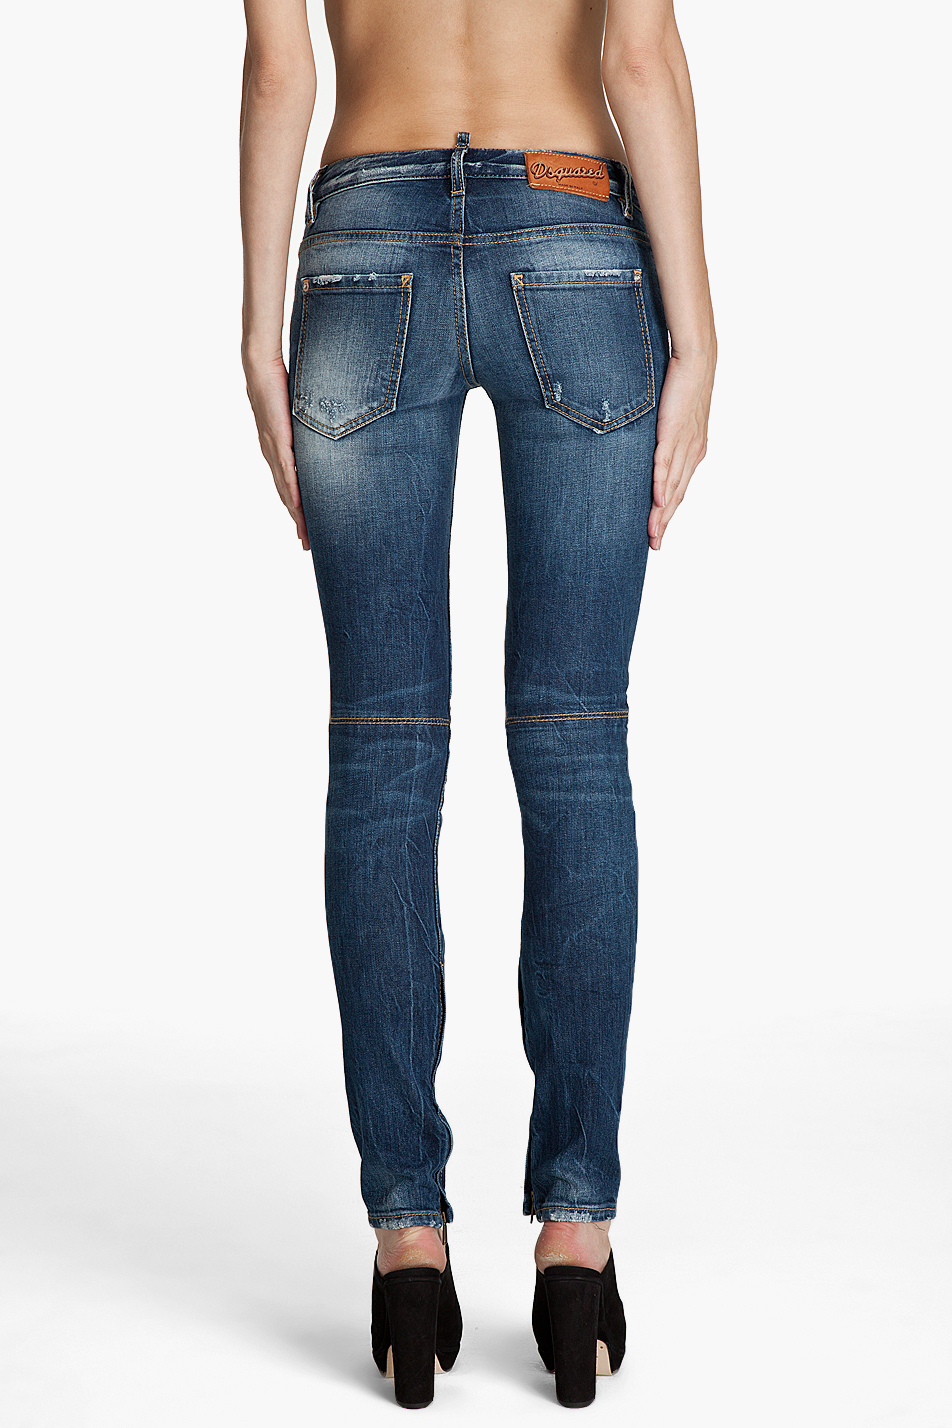 Cheap philadelphia super low rise skinny jeans for women teens